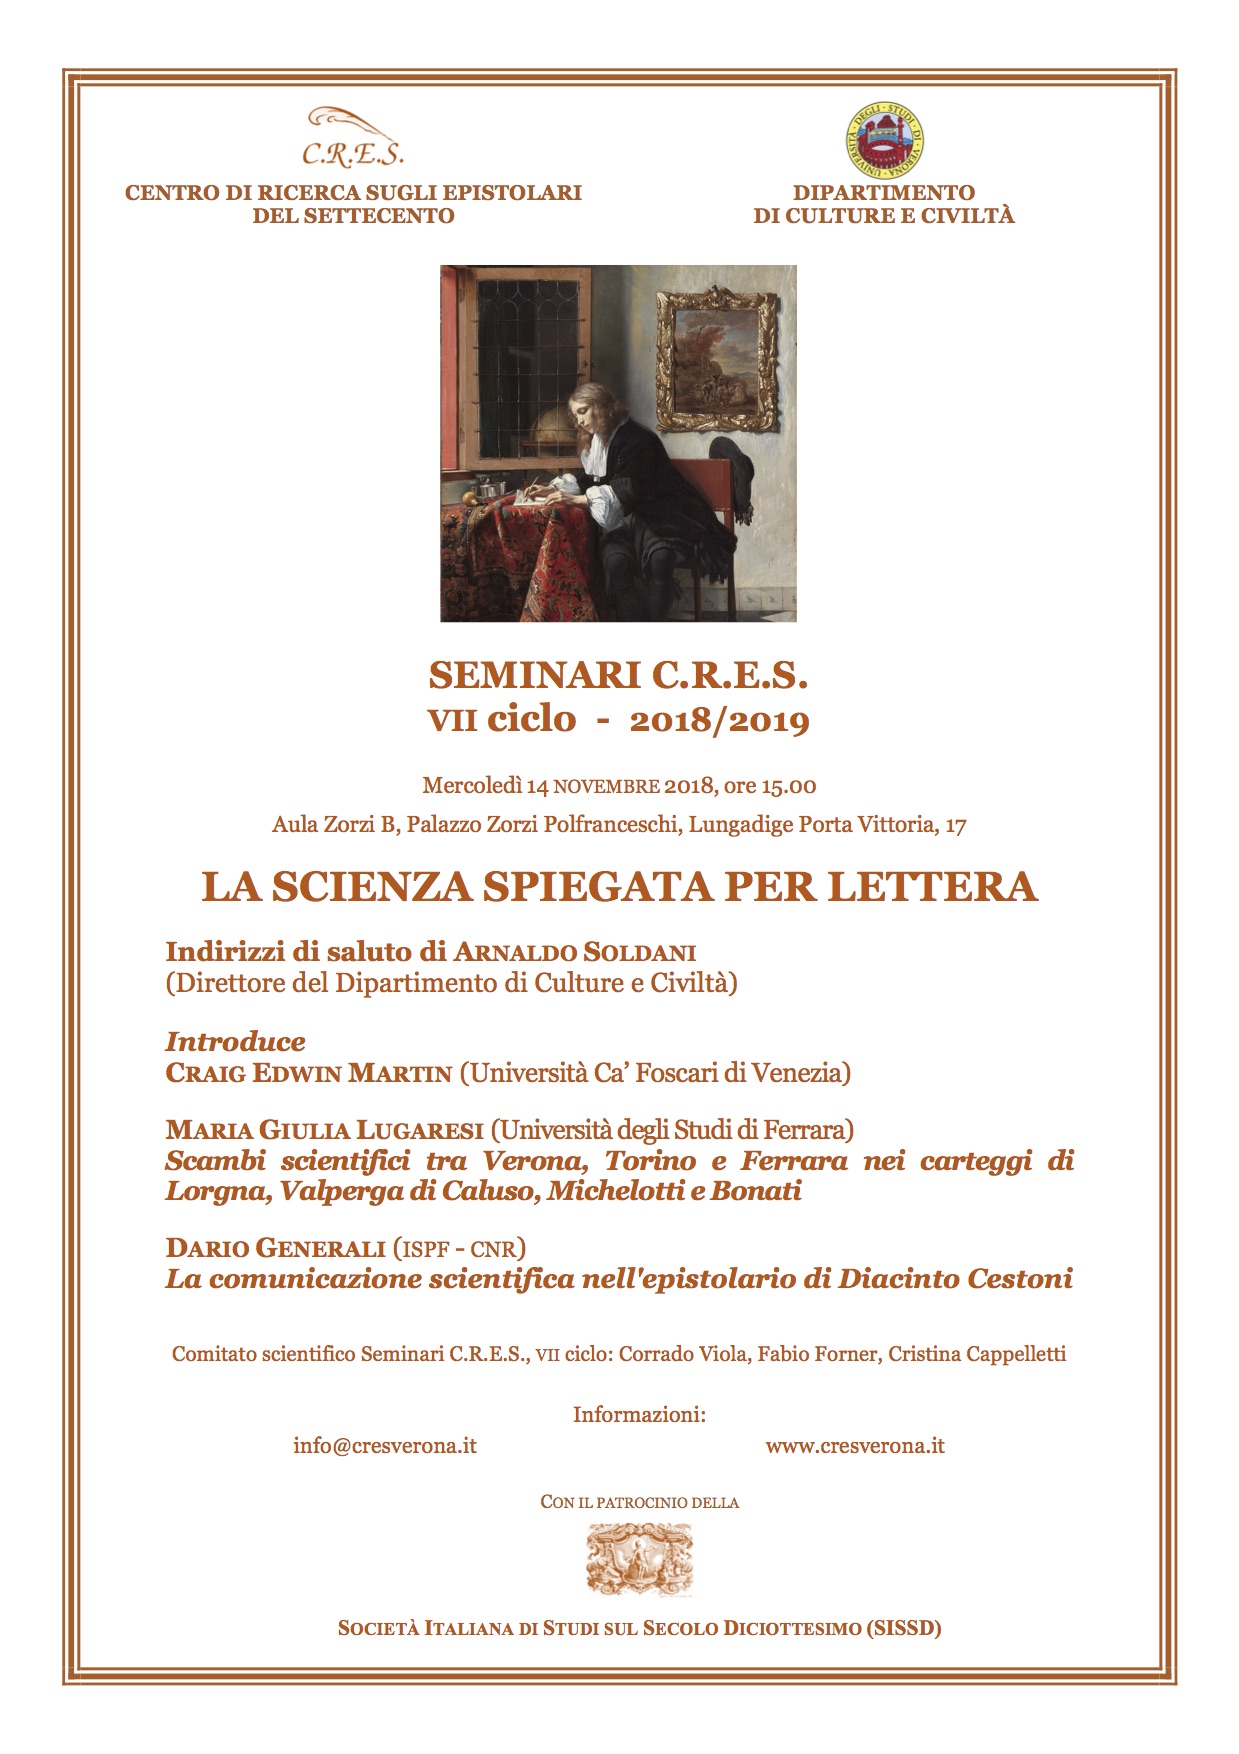 01 Seminari_CRES_-_locandina_14_novembre